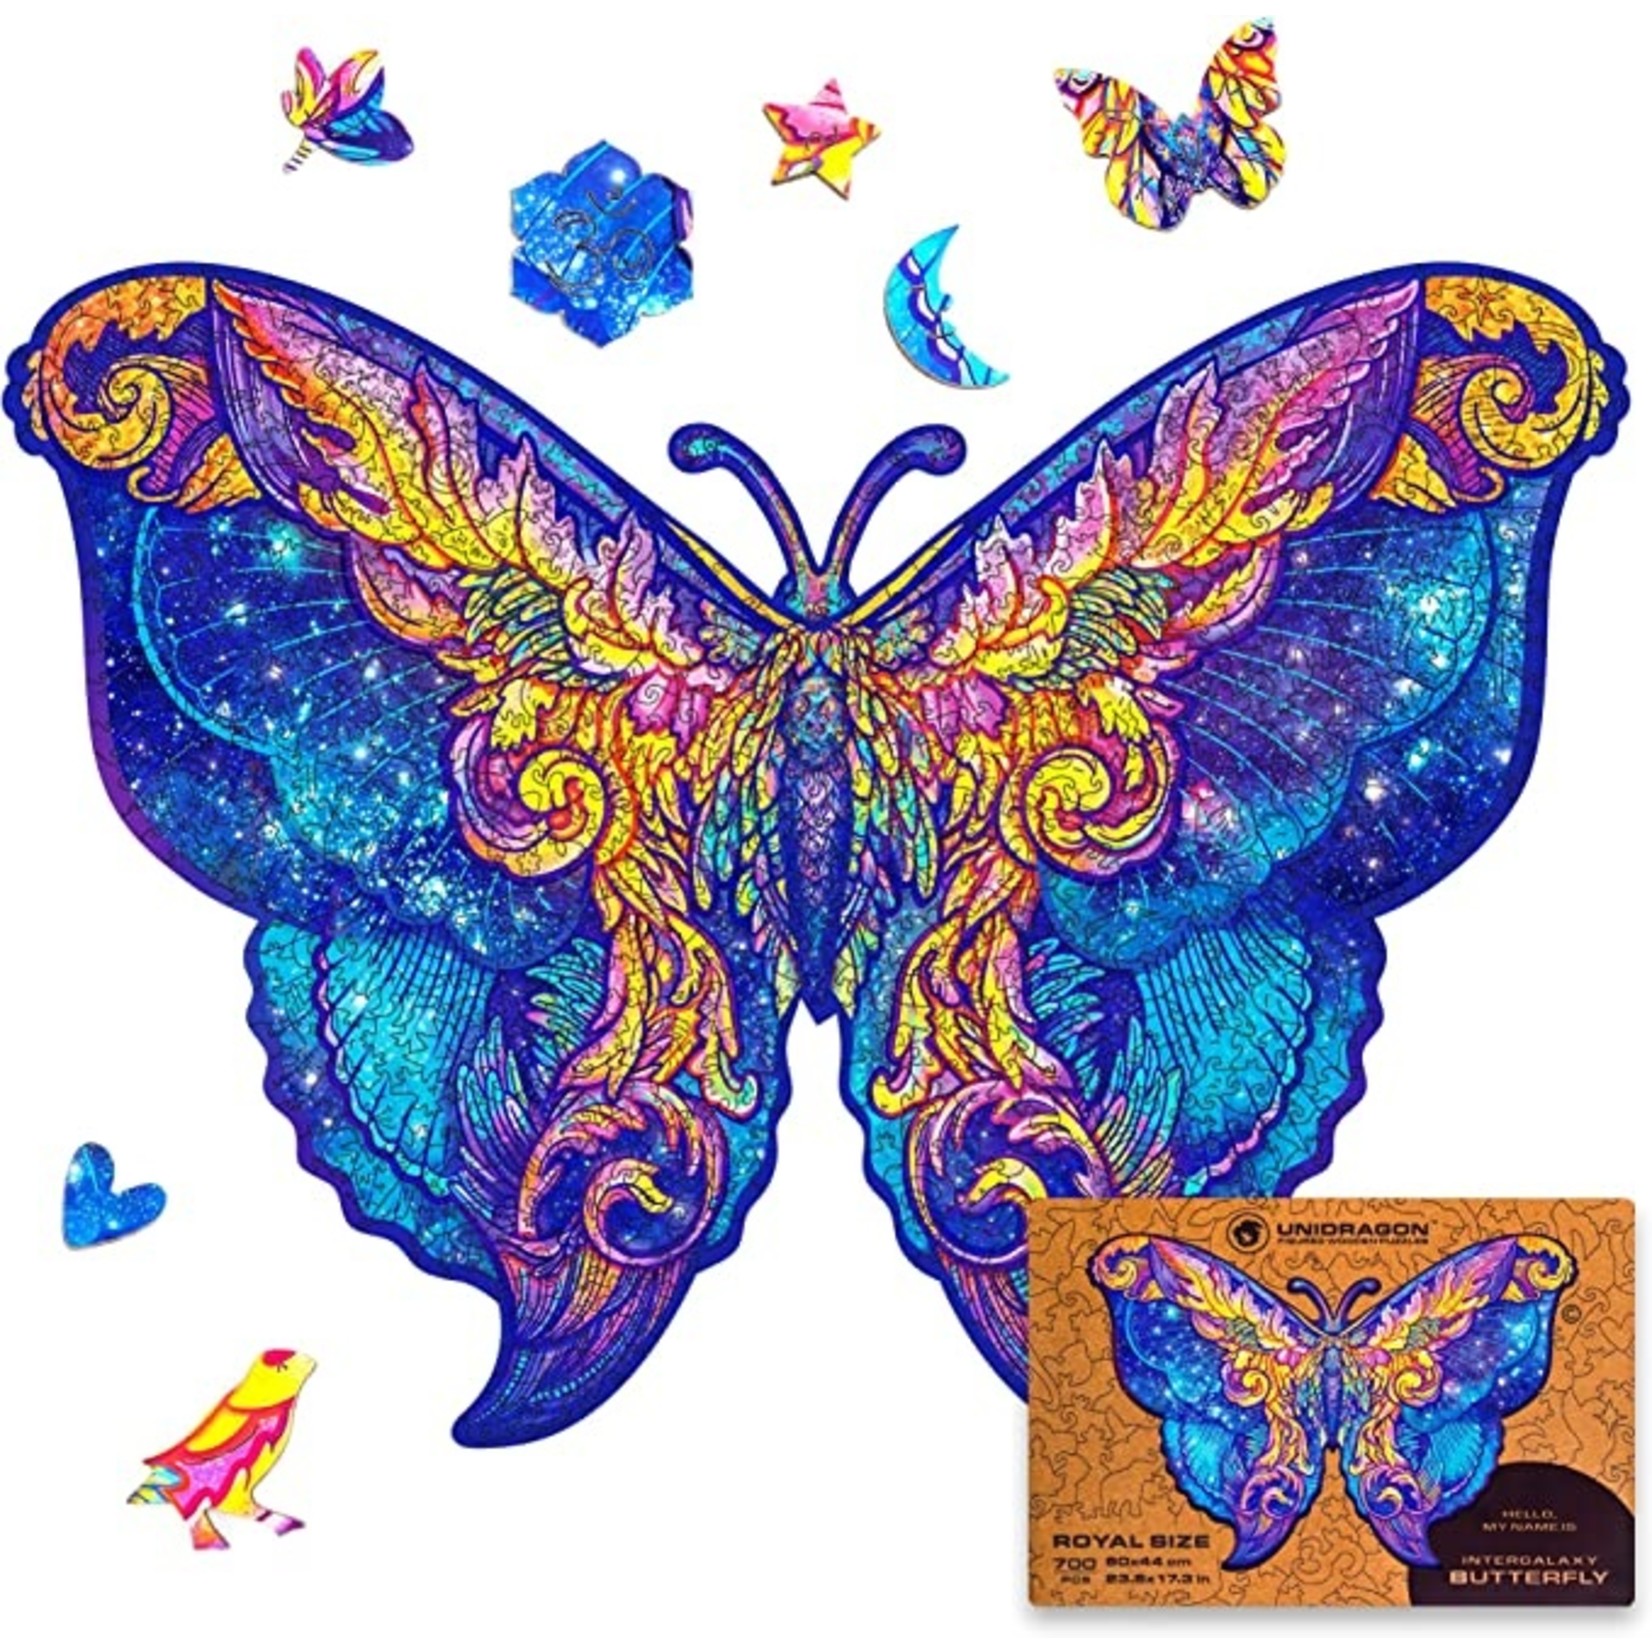 Unidragon Wood Puzzle - Intergalaxy Butterfly -